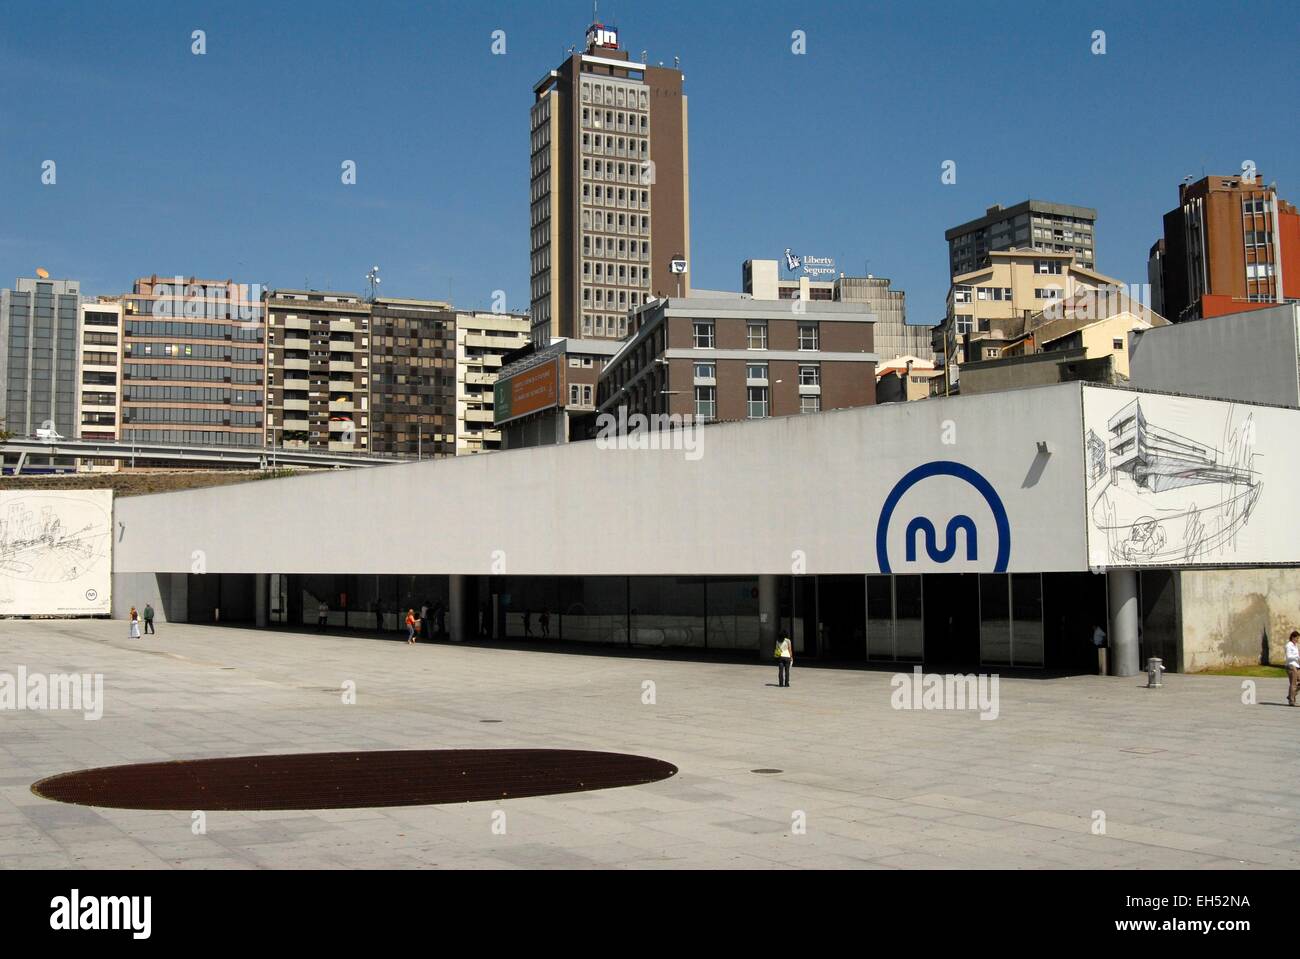 Portugal, Nordregion, Porto, Eingang zu einer u-Bahnstation Stockfoto